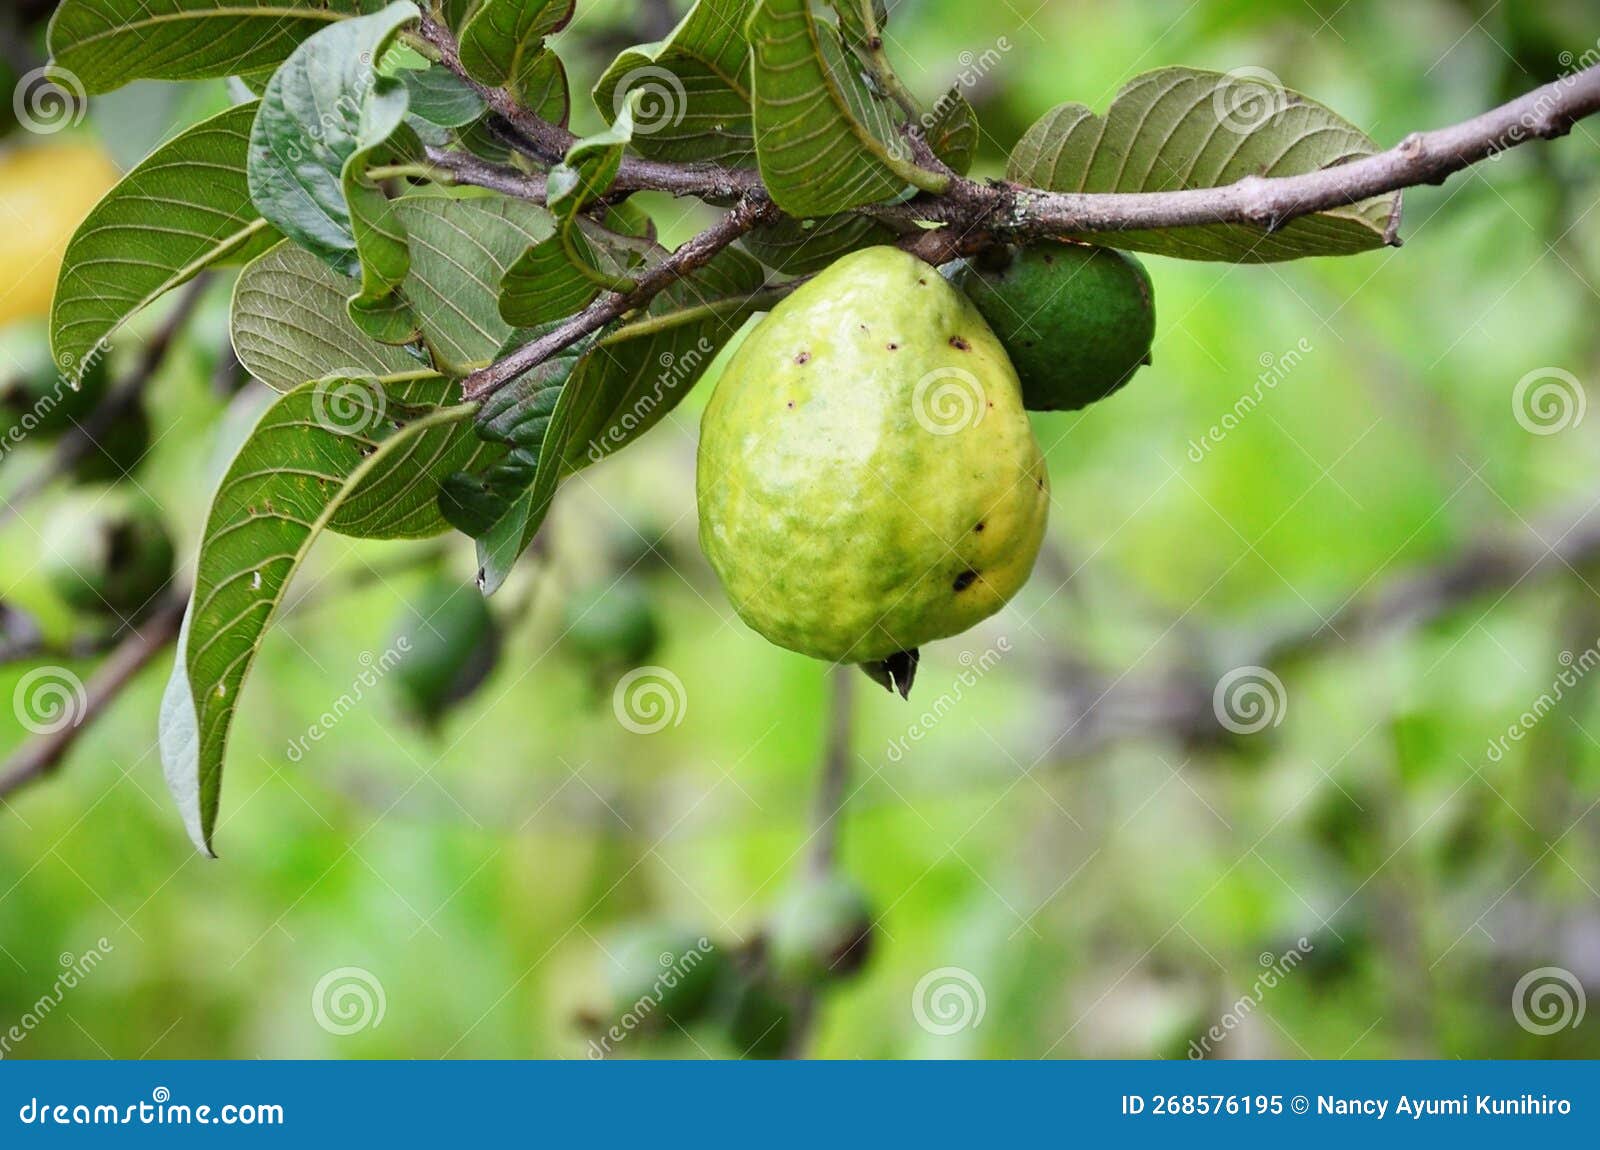 a ripening fruit of psidium guajava